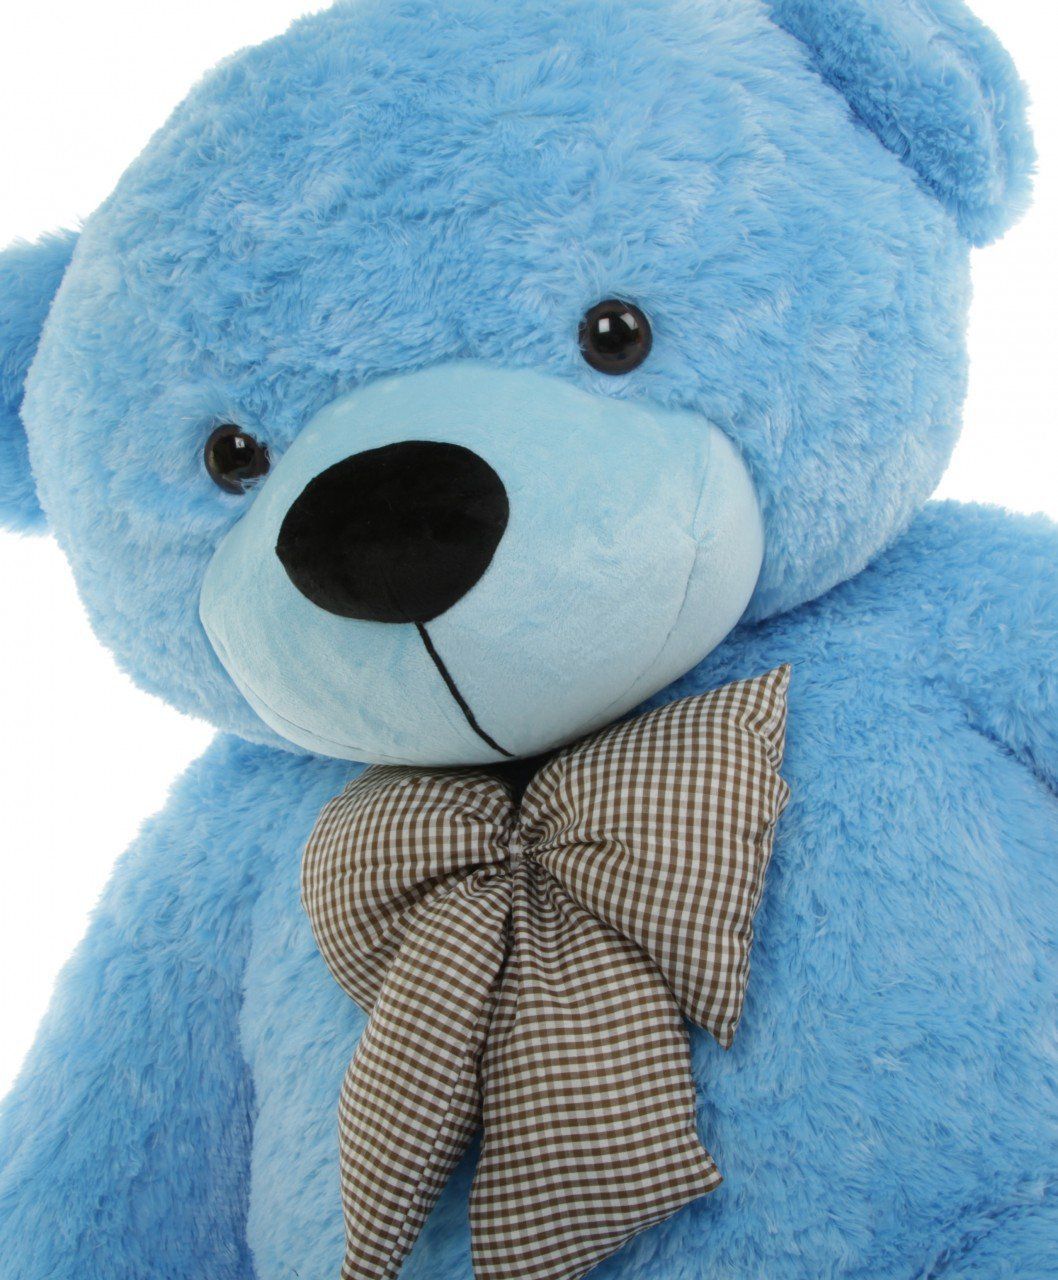 cute blue teddy bear